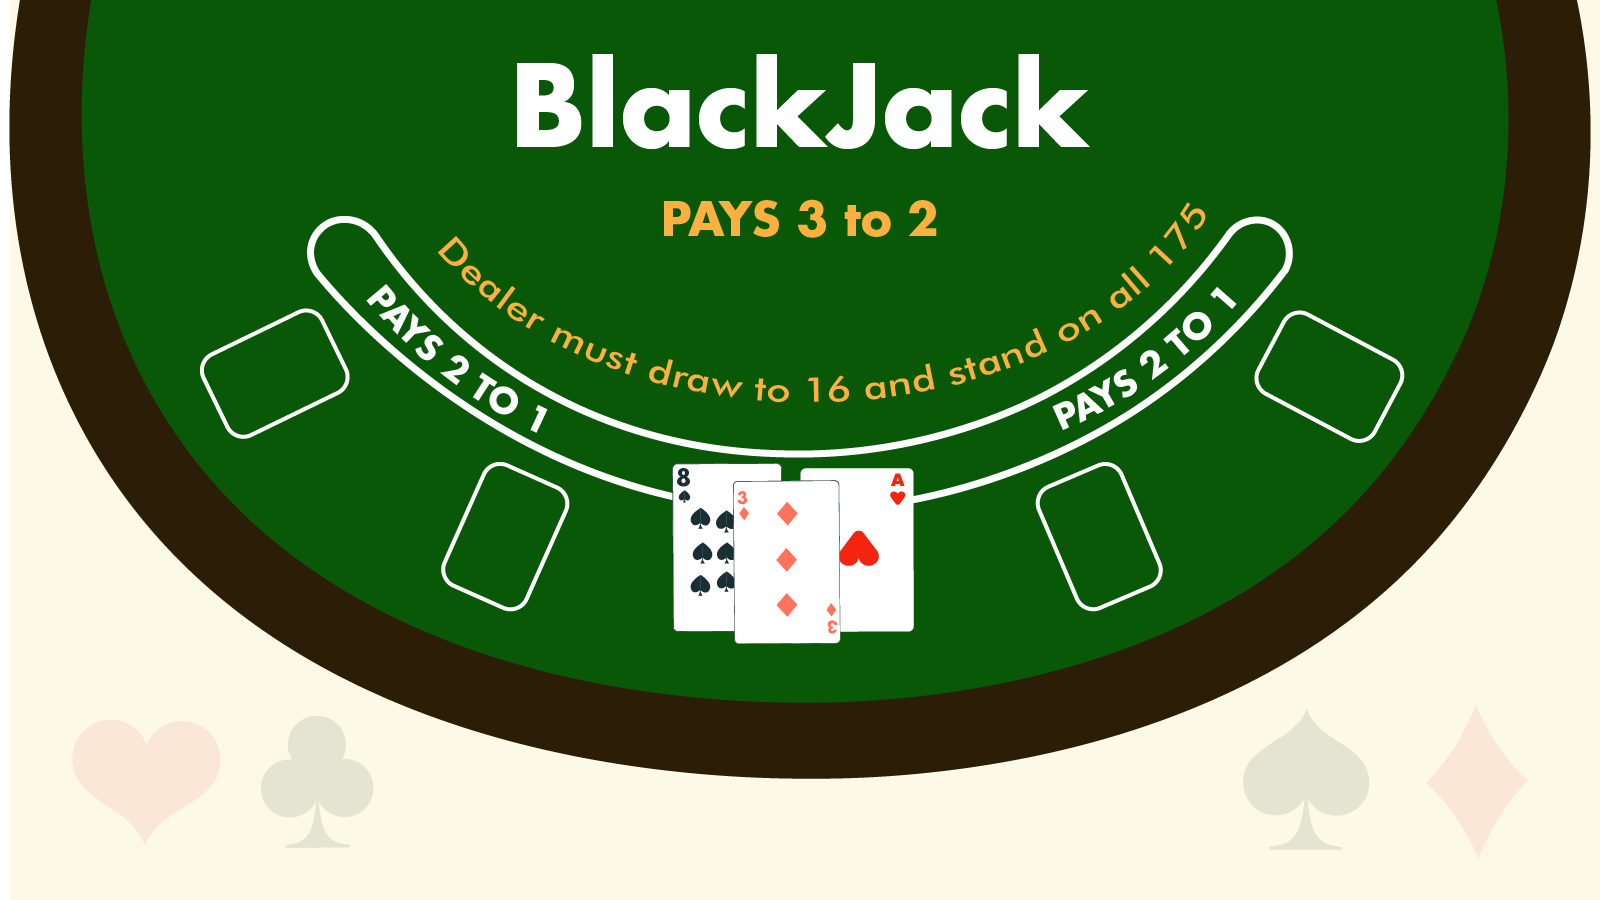 Blackjack pays 3 to 2